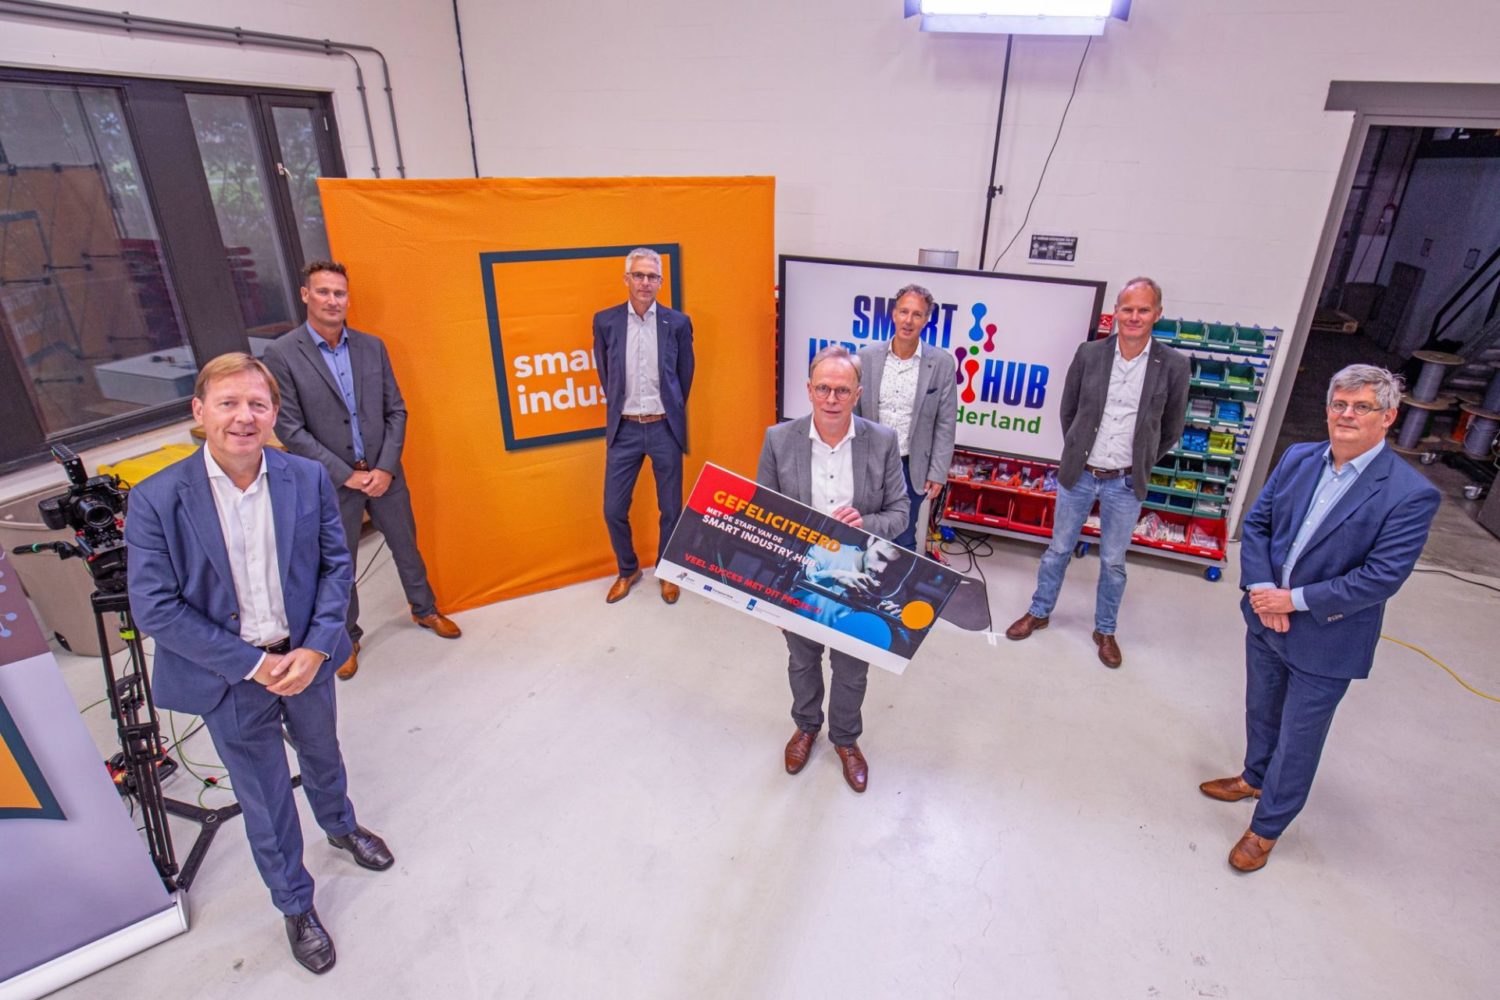 Hub, hub, hub! Join the Smart Industry Hub North Netherlands